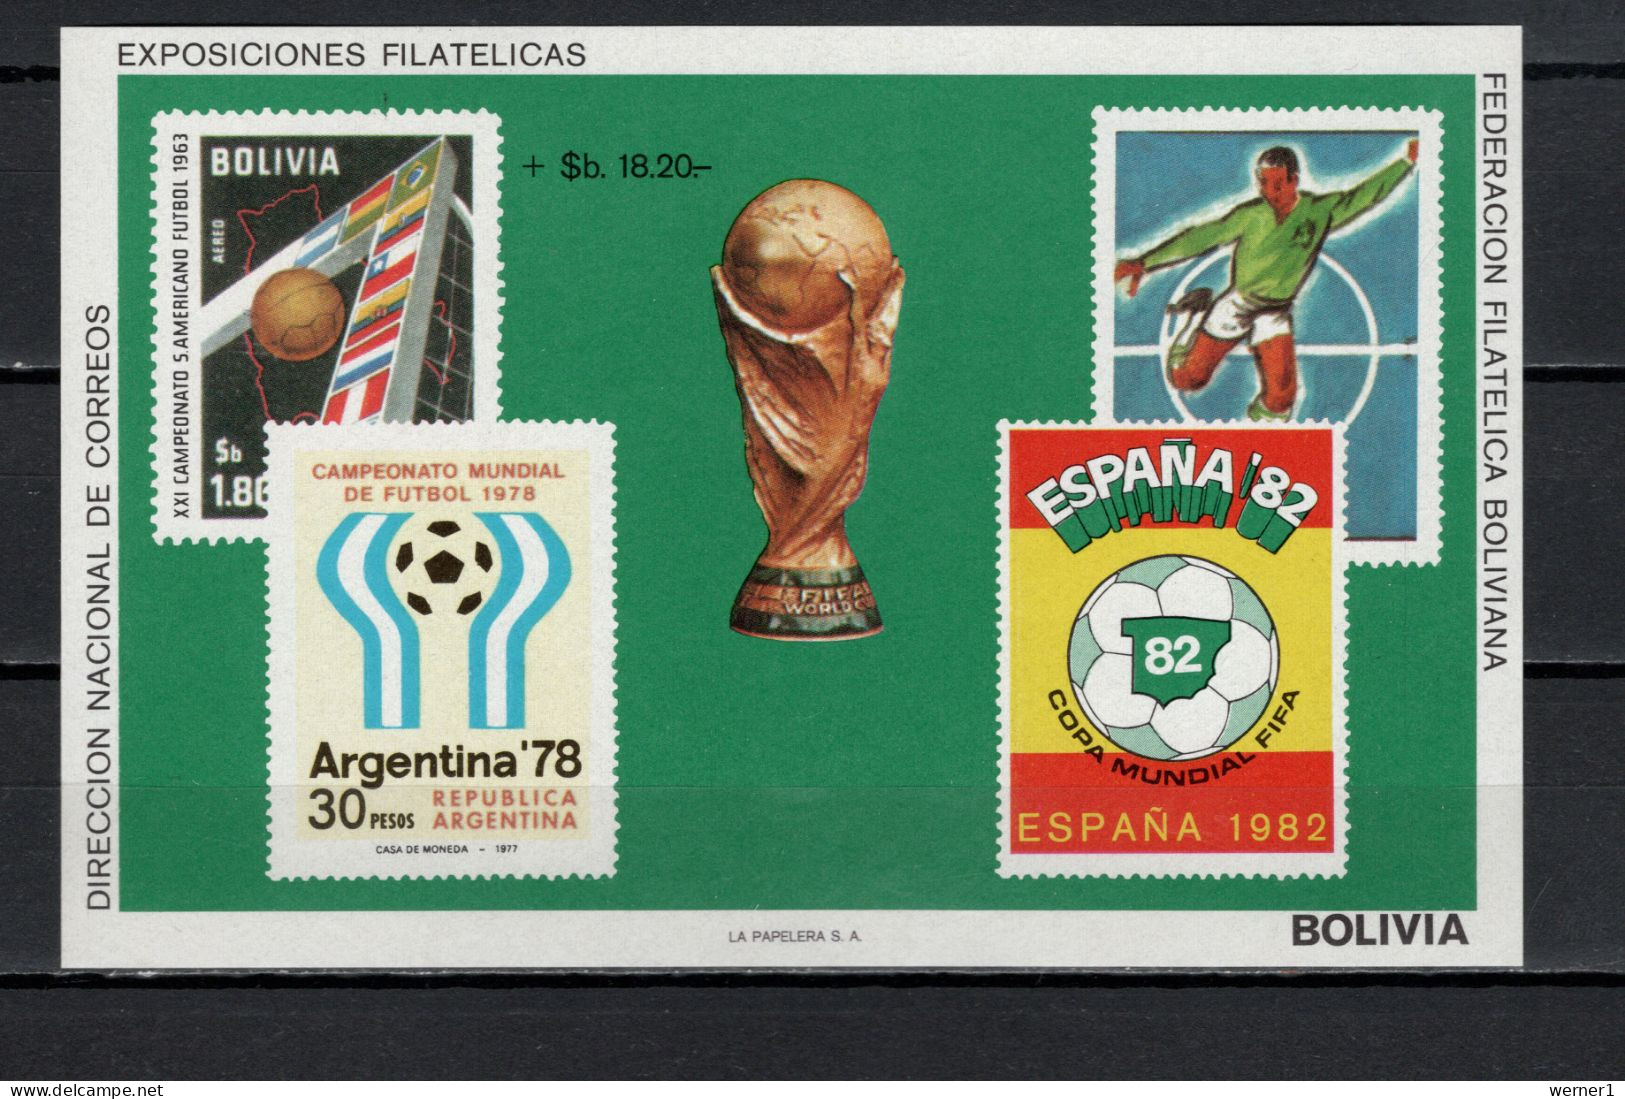 Bolivia 1979 Football Soccer World Cup S/s MNH -scarce- - 1978 – Argentina